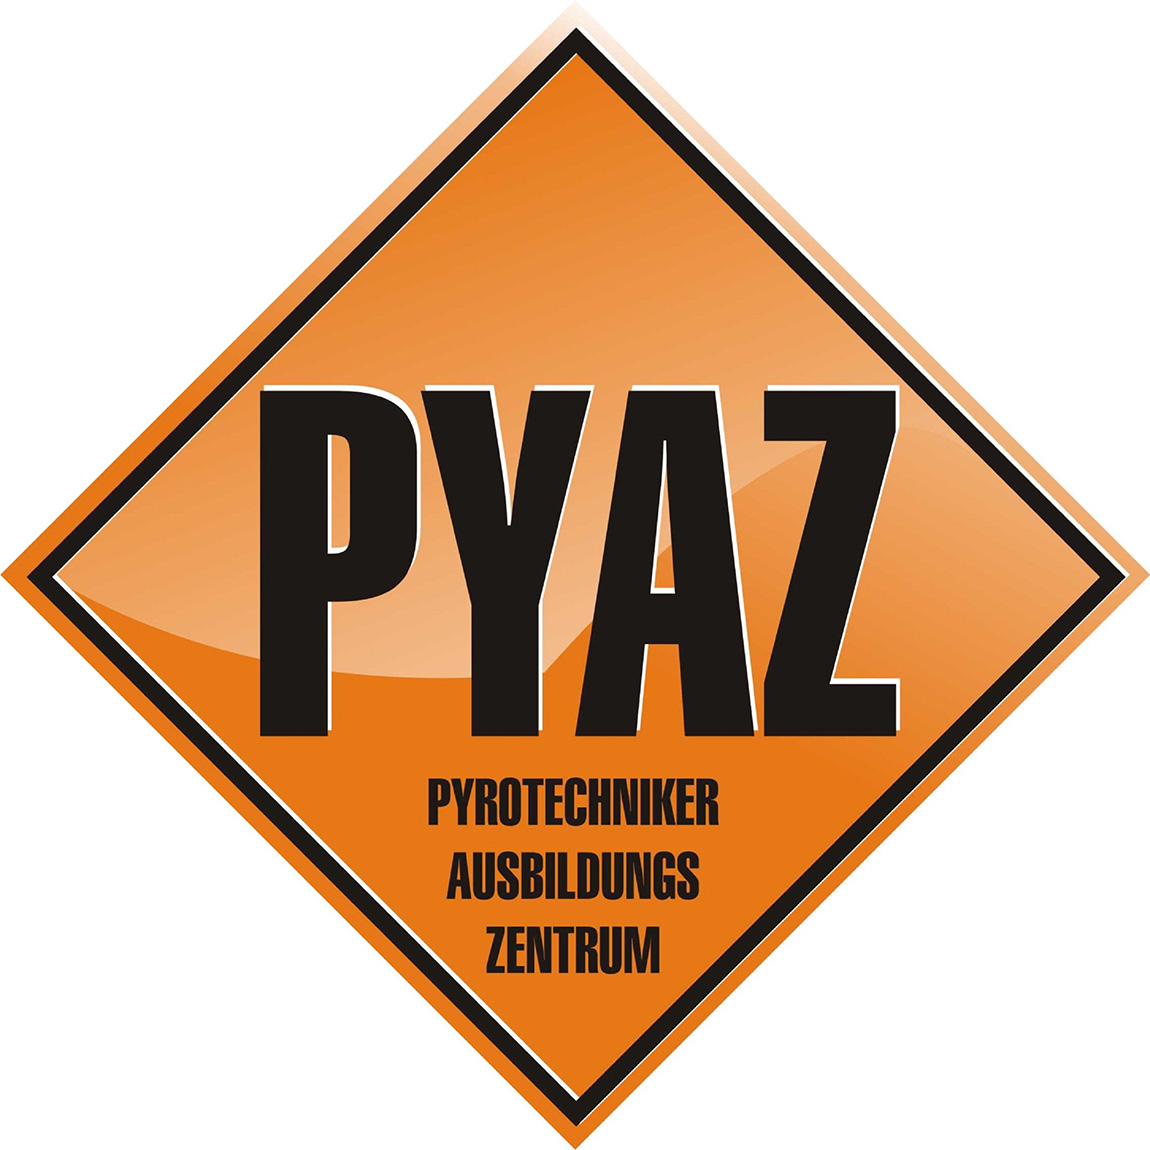 Relight my fire - verantwortungsvoller Umgang mit Explosivstoffen dank PYAZ